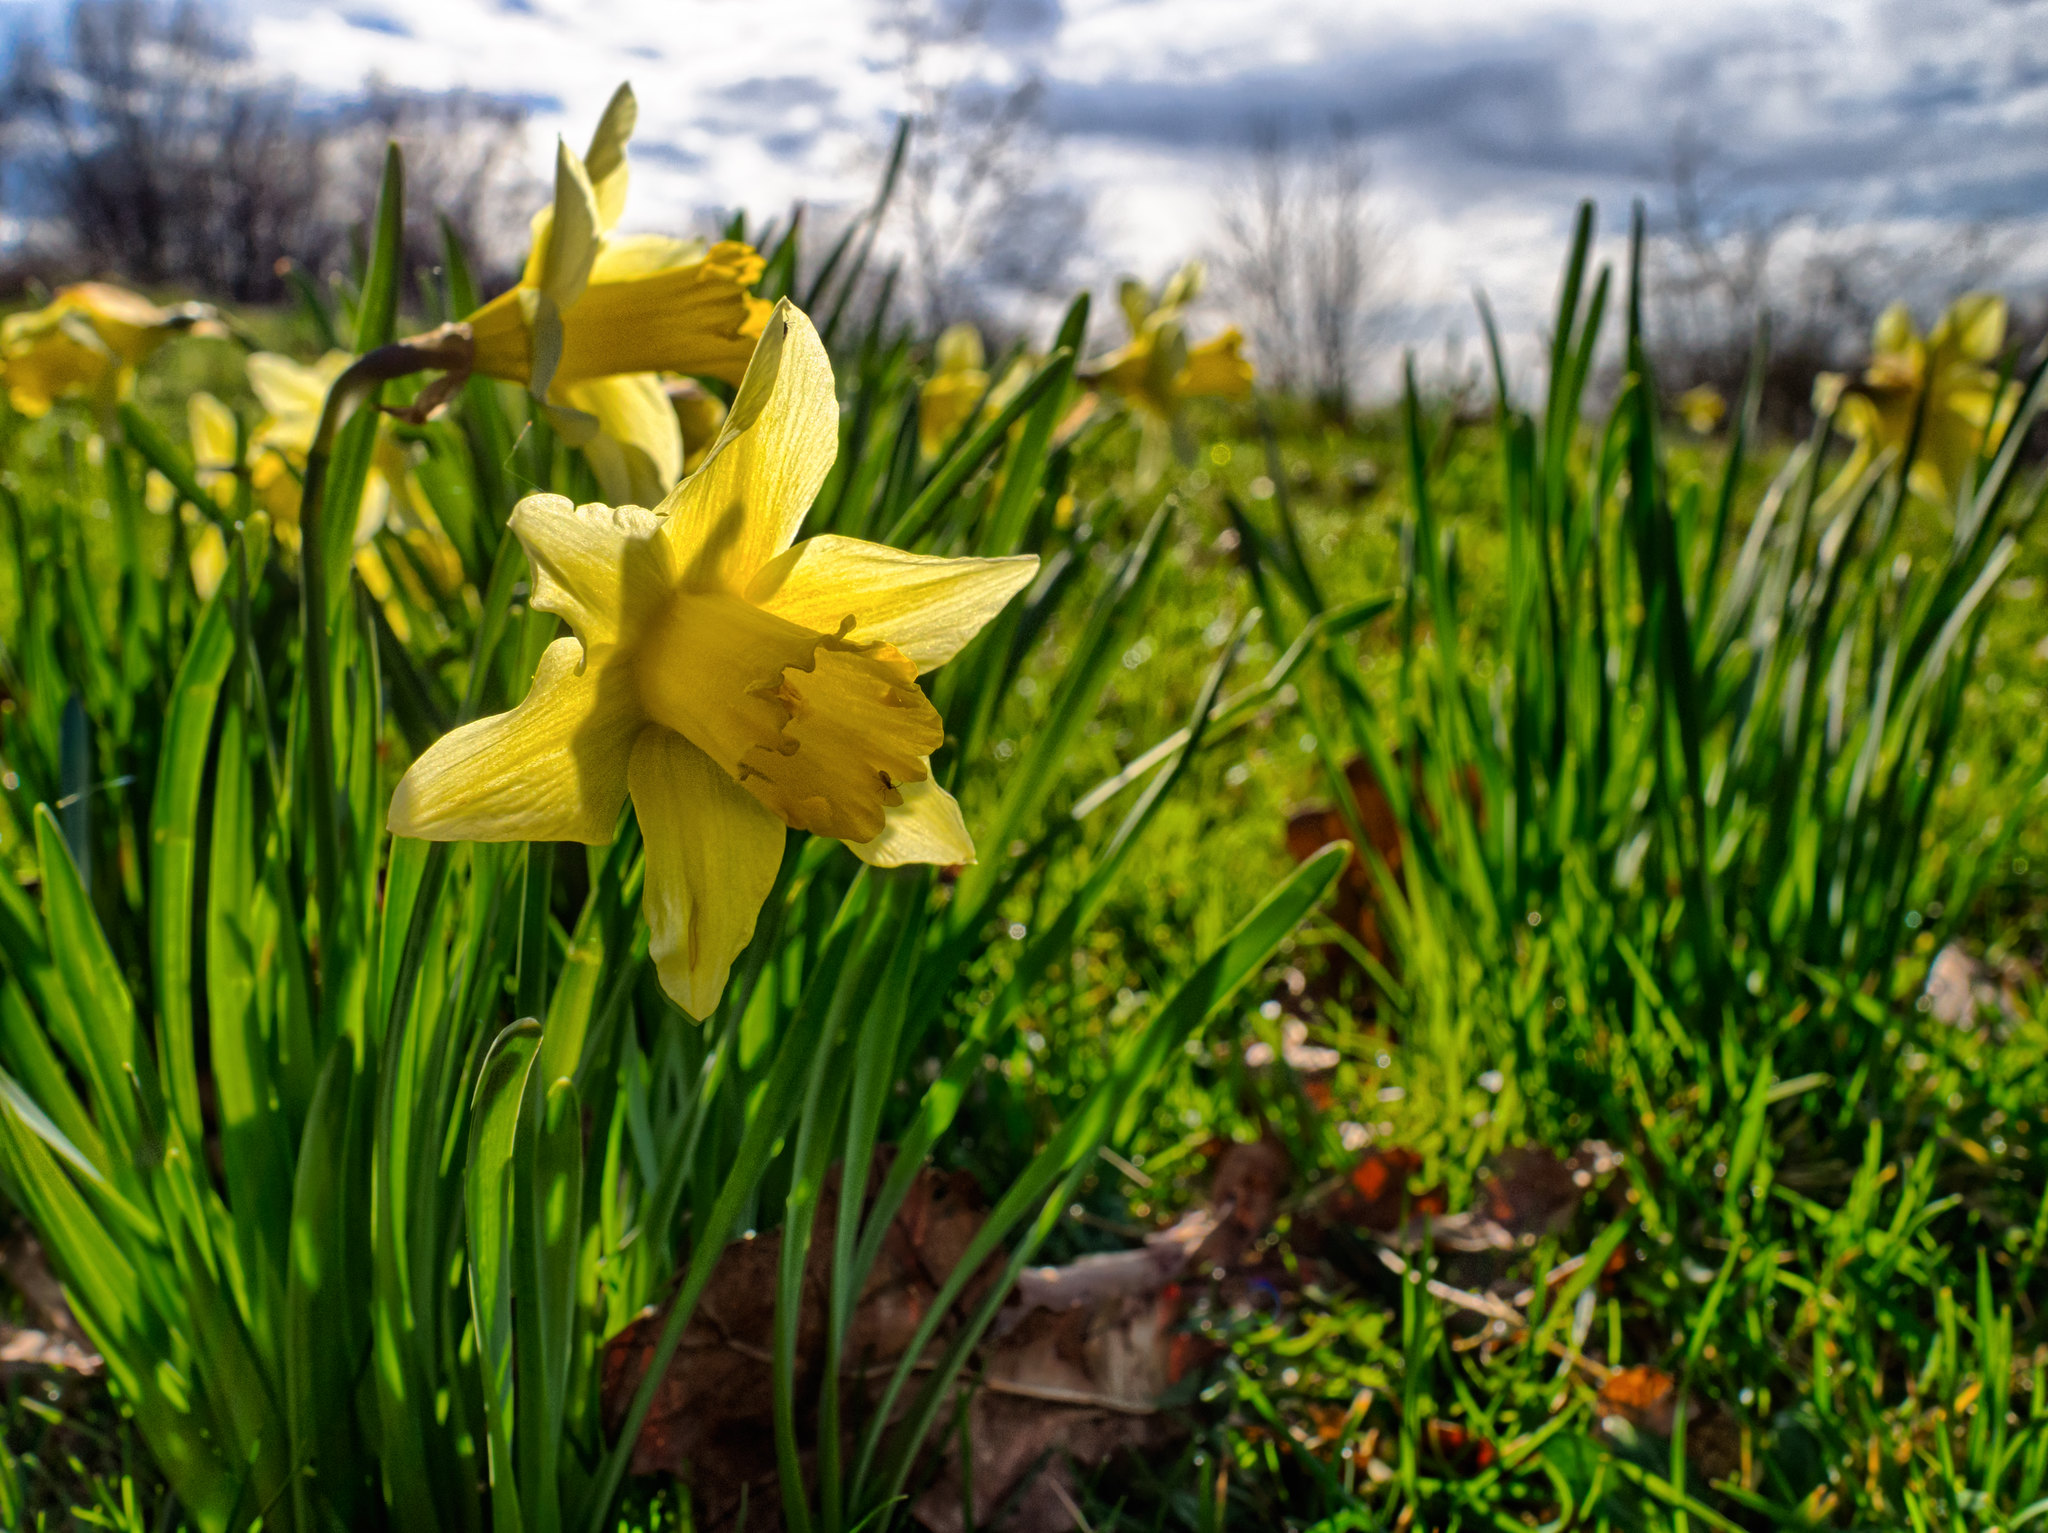 Yellow daffodil in a field